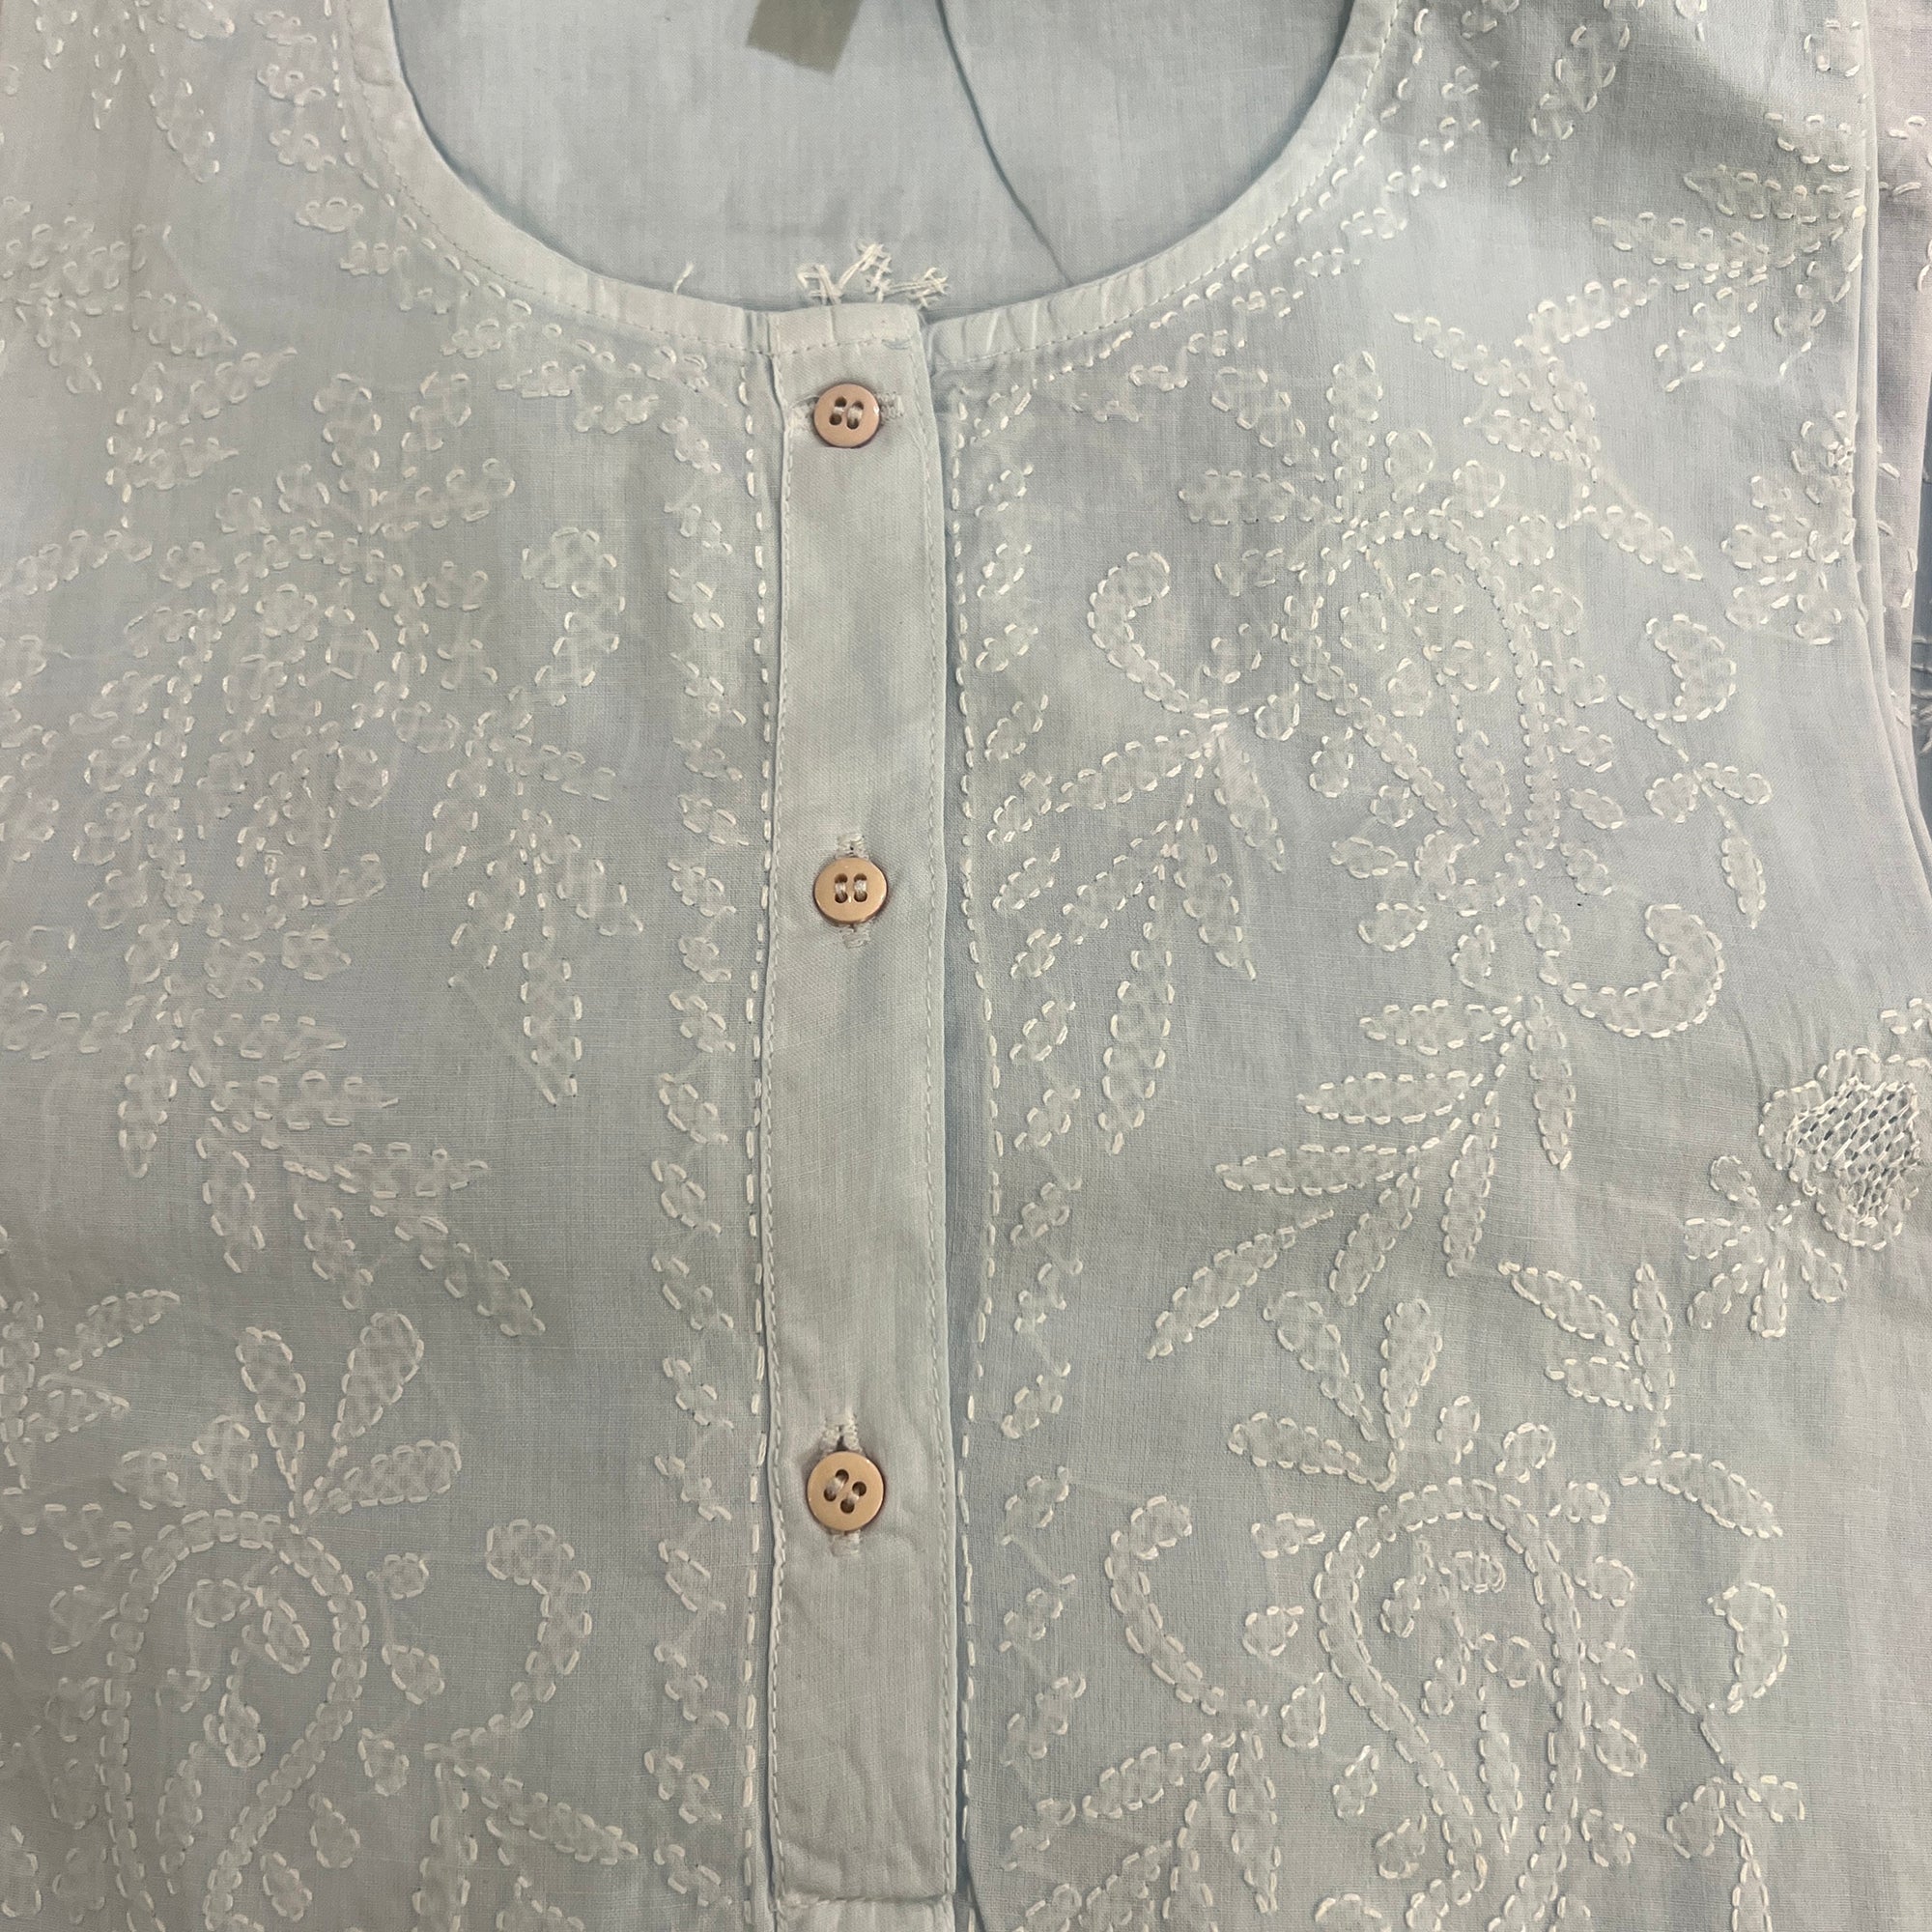 Cotton Chikan Short Kurtas 500-6 Colors - Vintage India NYC